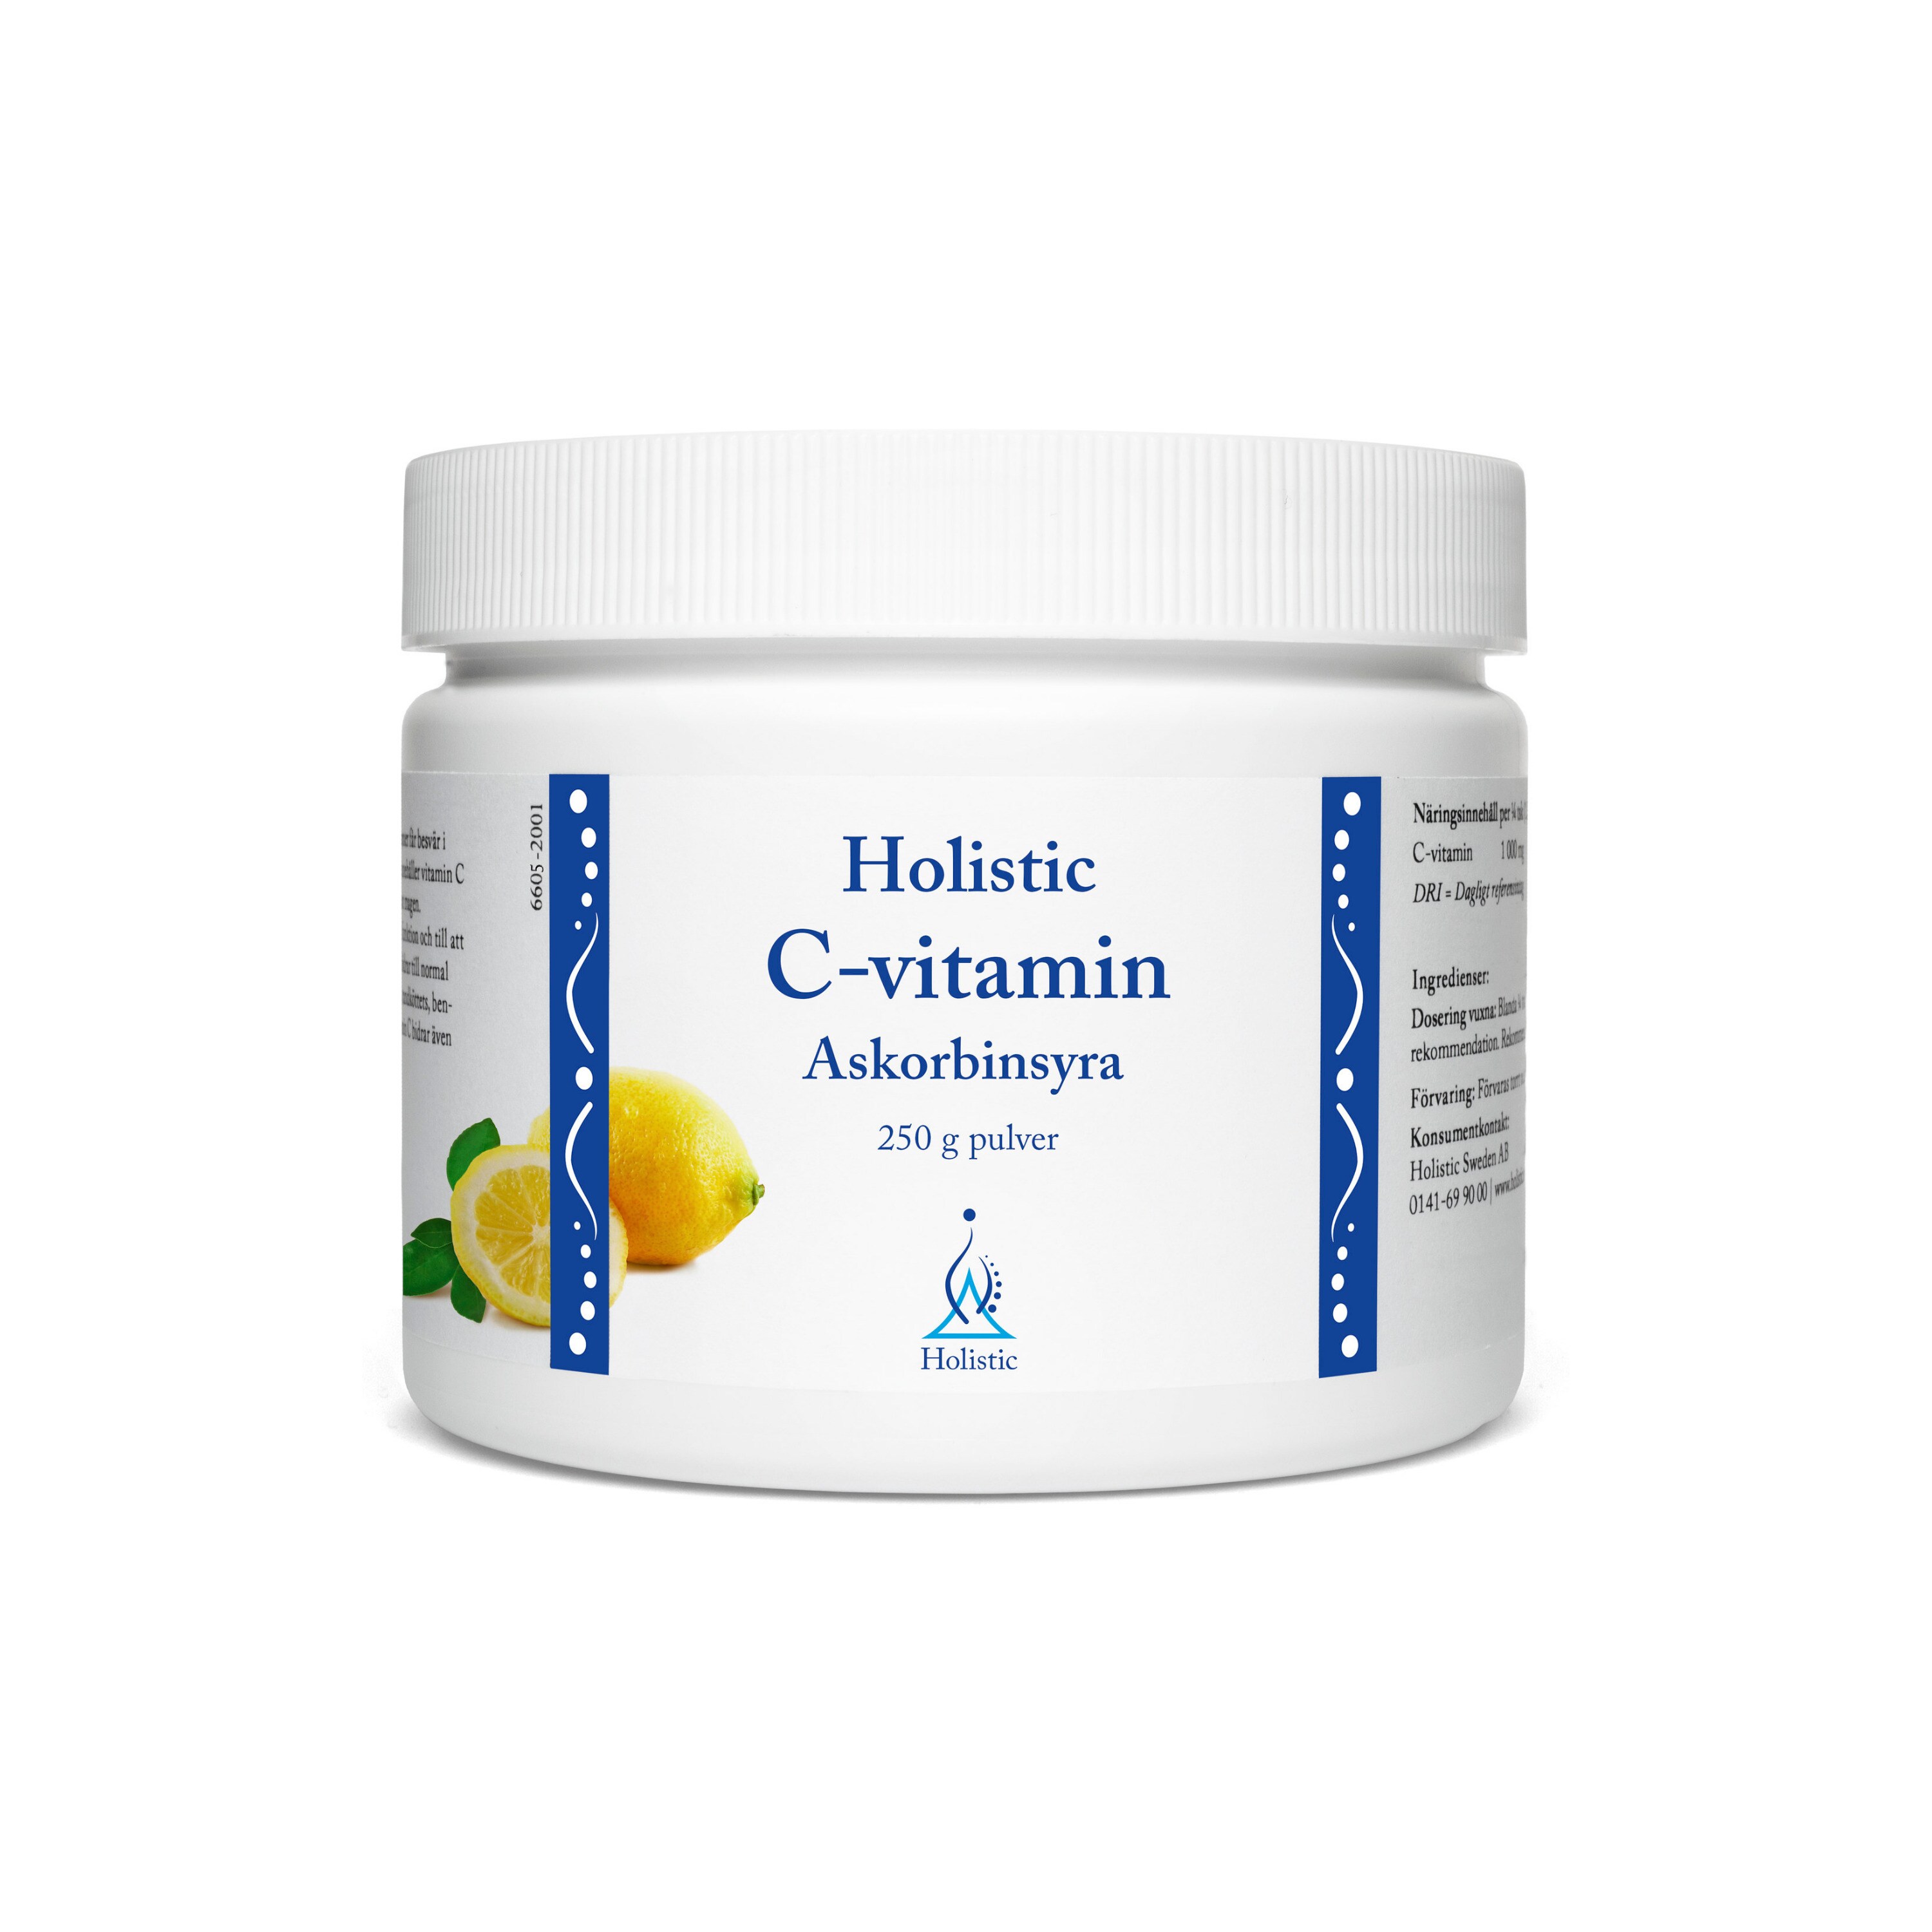 C-vitamin Askorbinsyra 250g